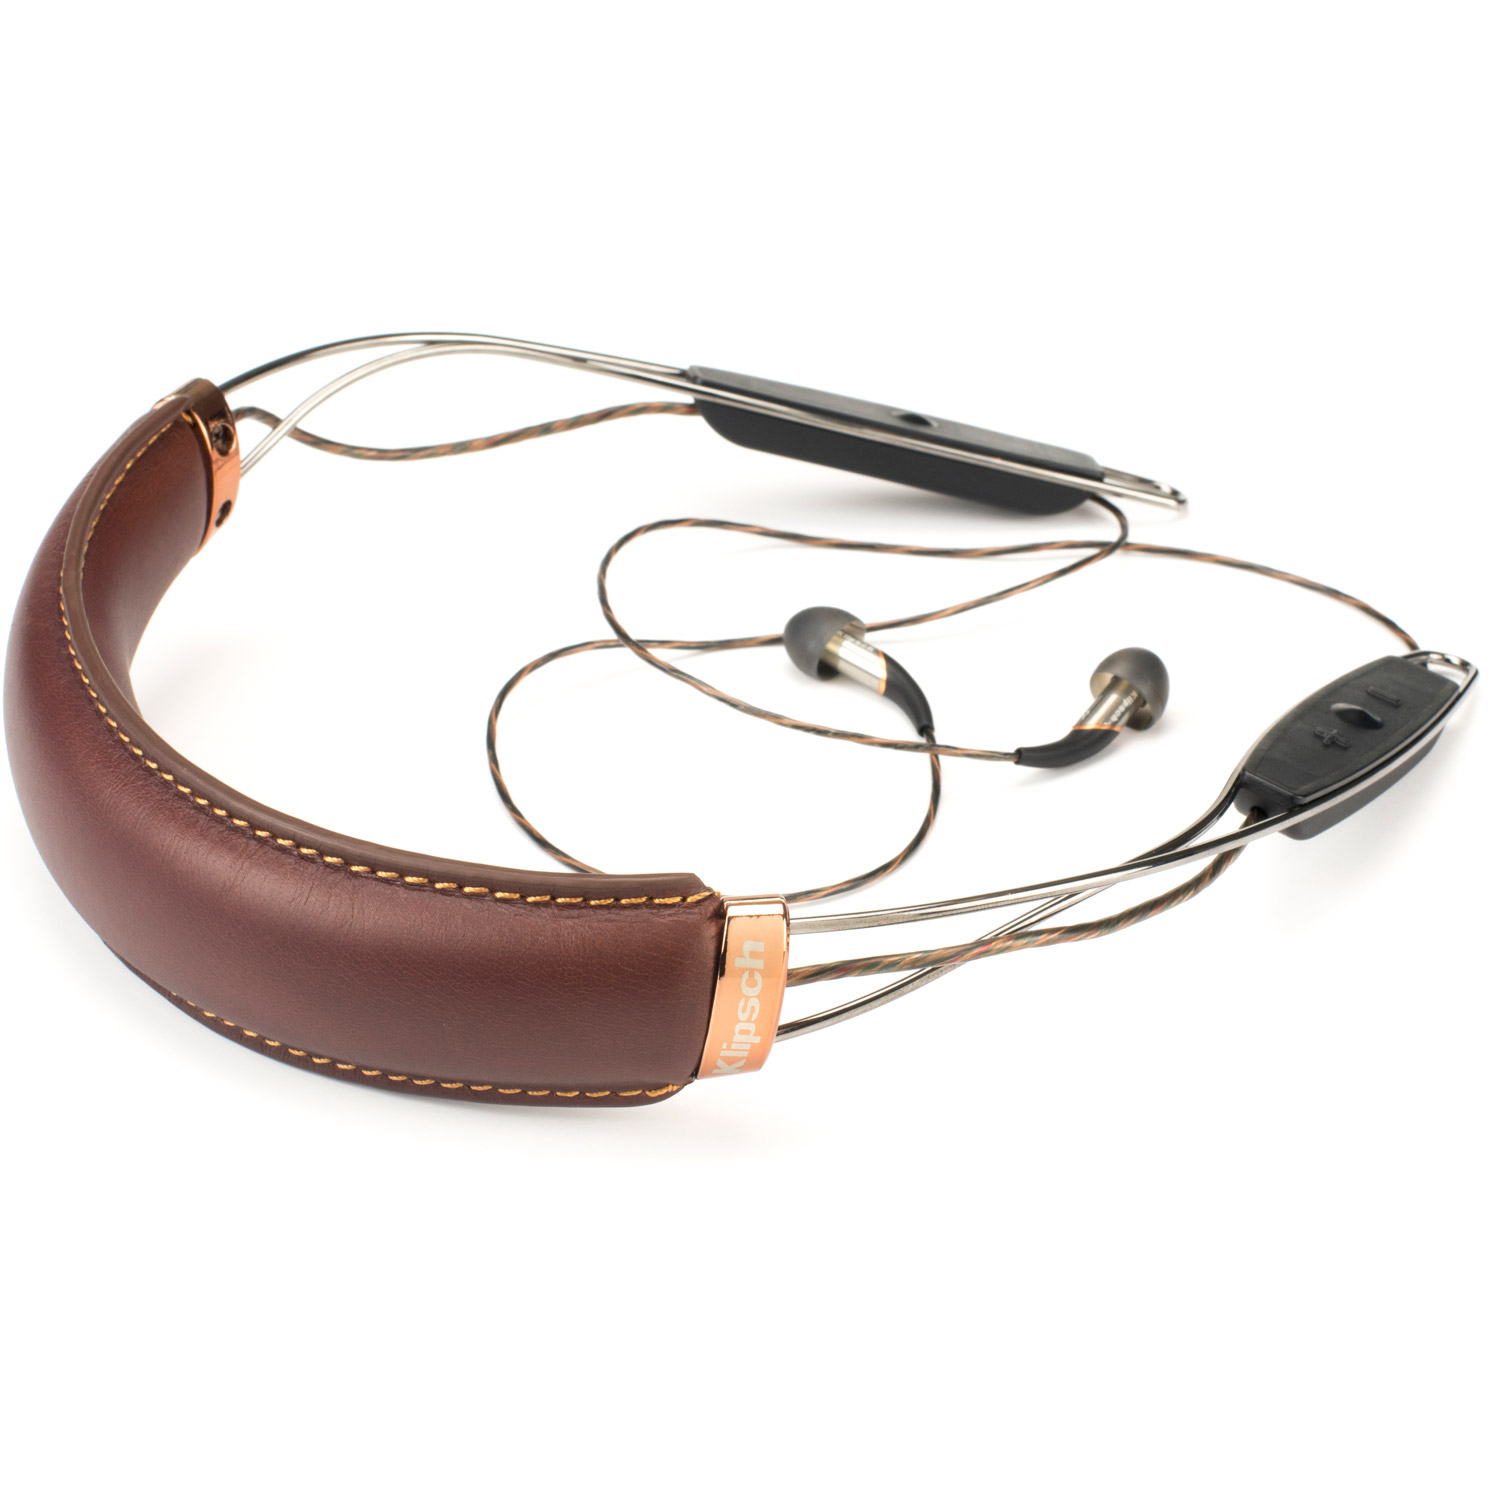 neckband bluetooth headphones